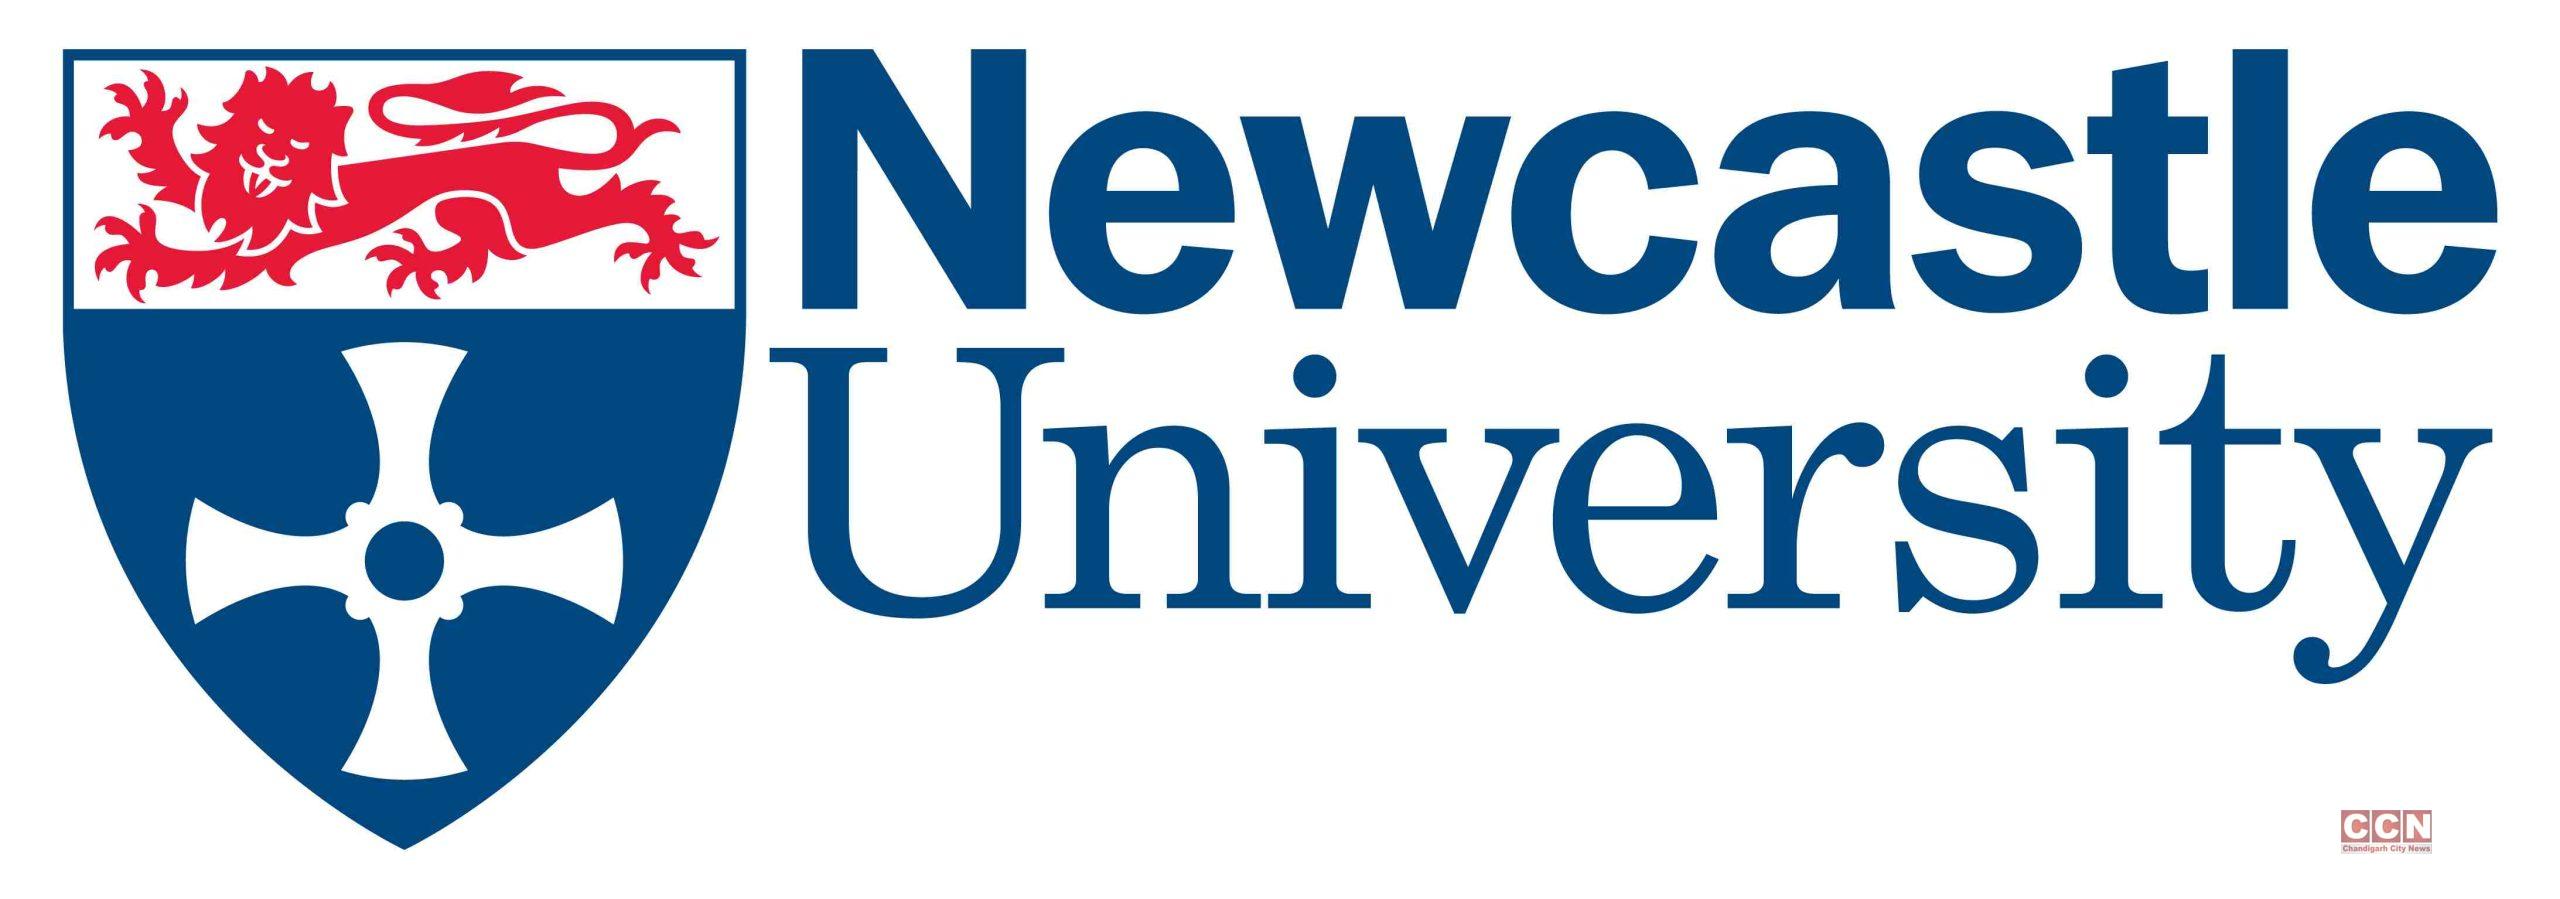 Newcastle University achieves highest ever global ranking